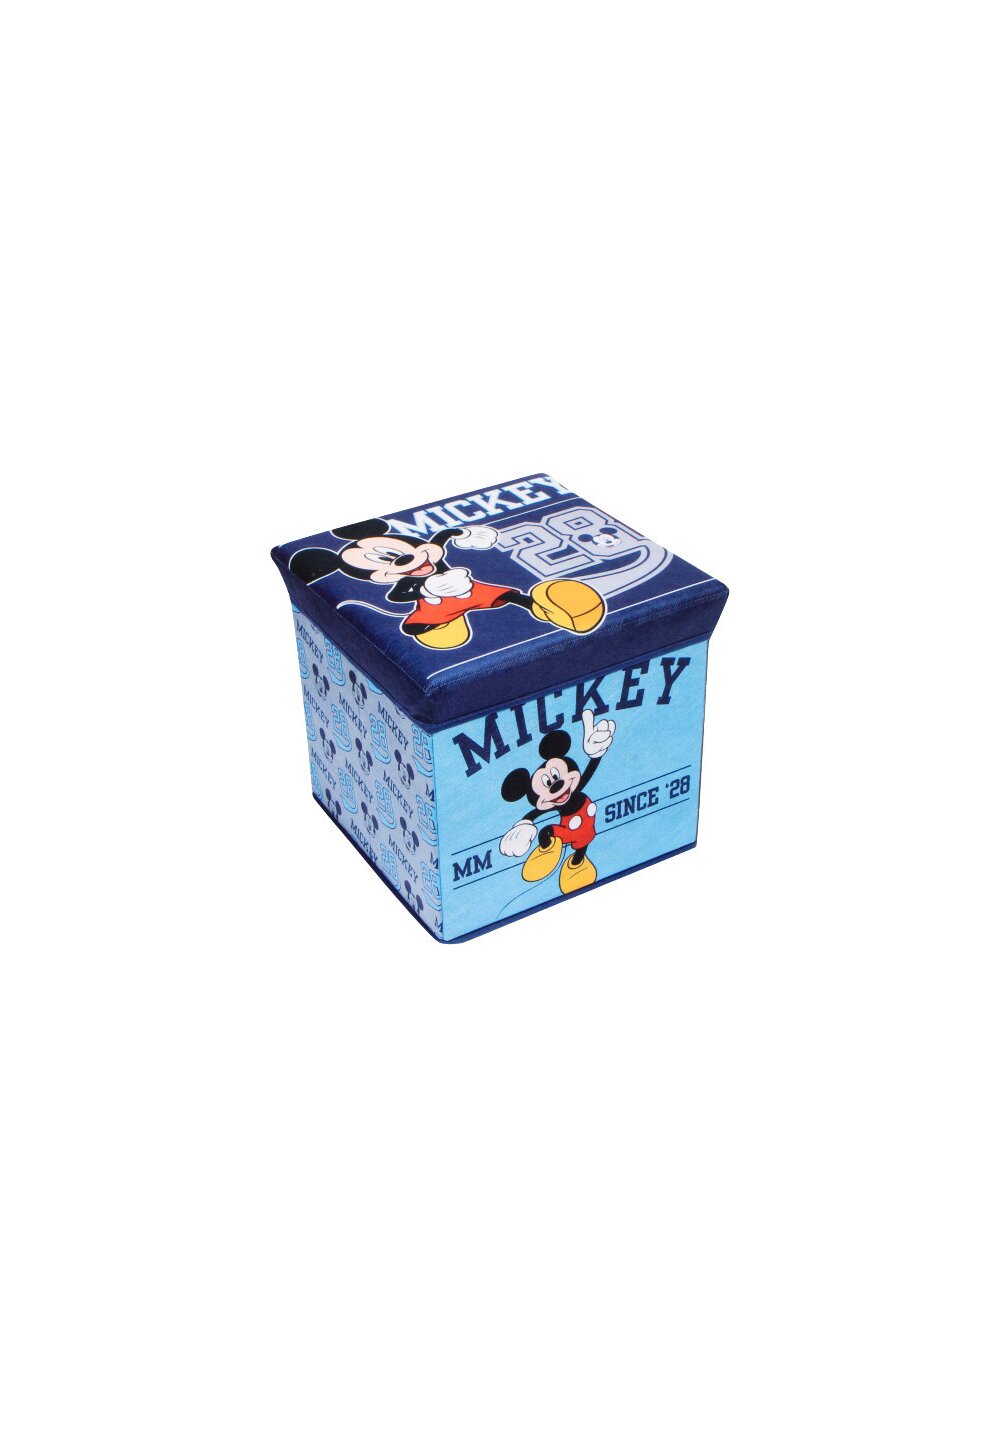 Cutie depozitare, Mickey Mouse, Since 28, bluemarin 28